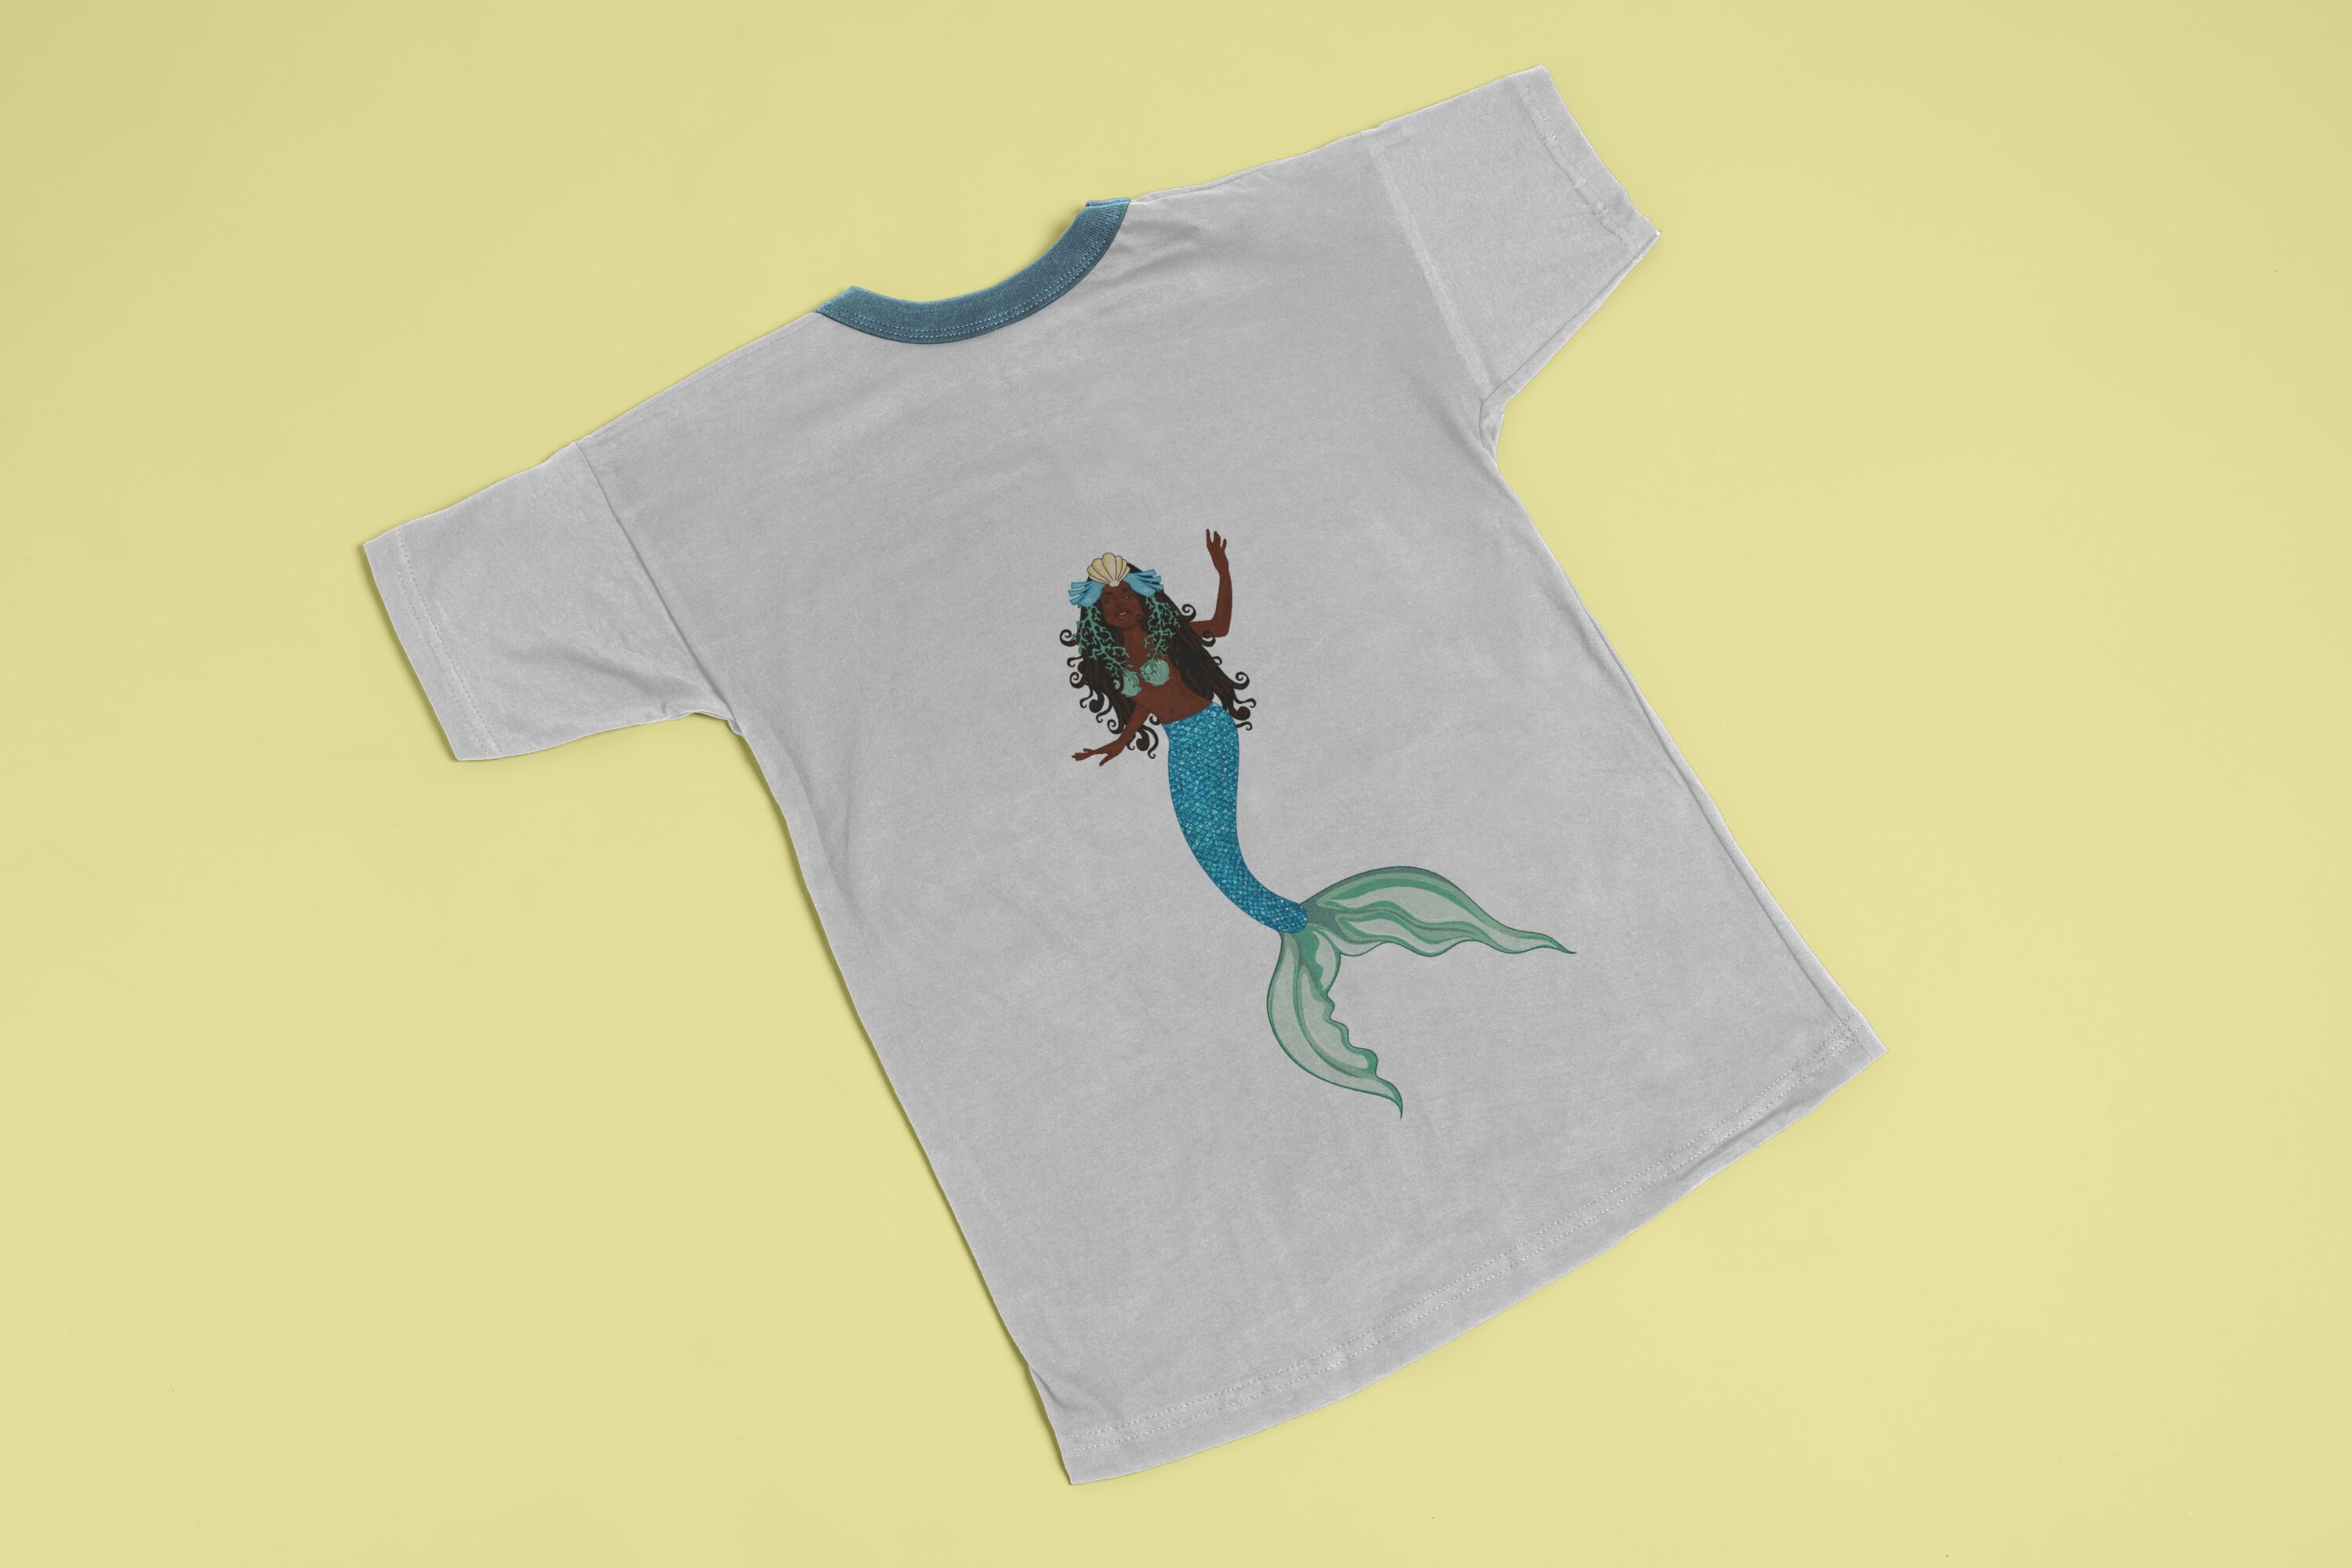 Mermaid on children's clothes.